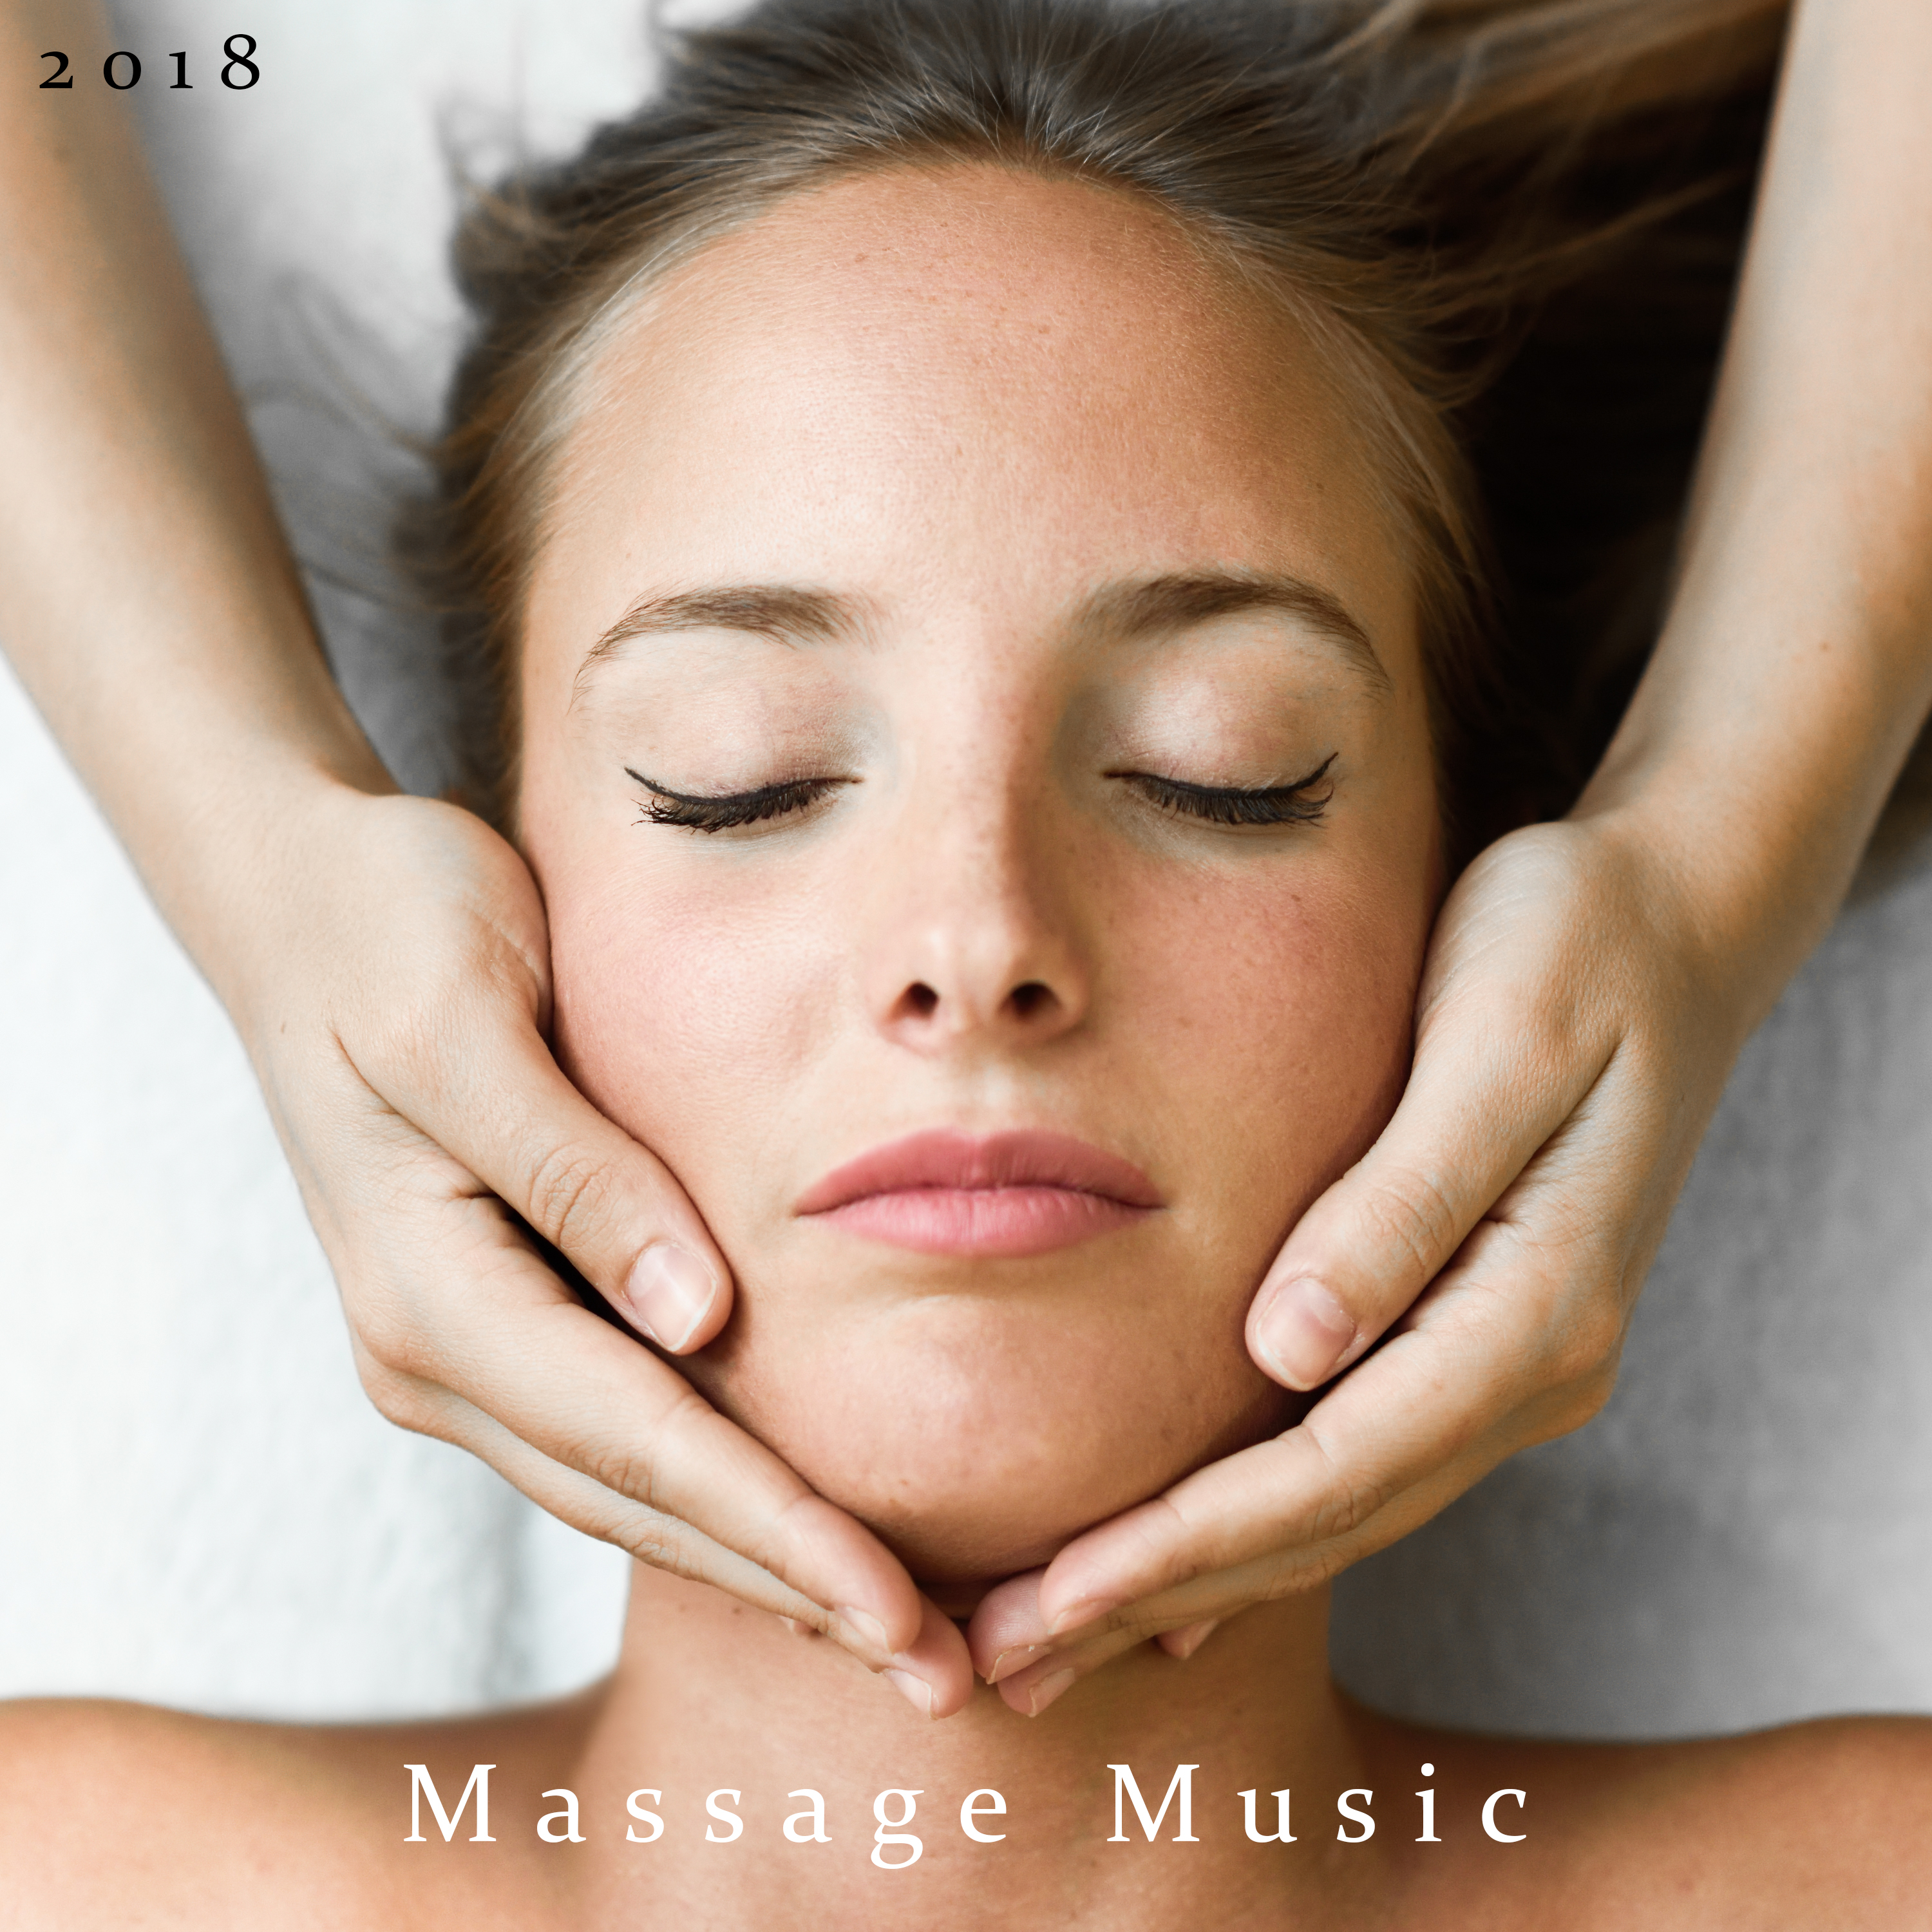 Massage Music 2018